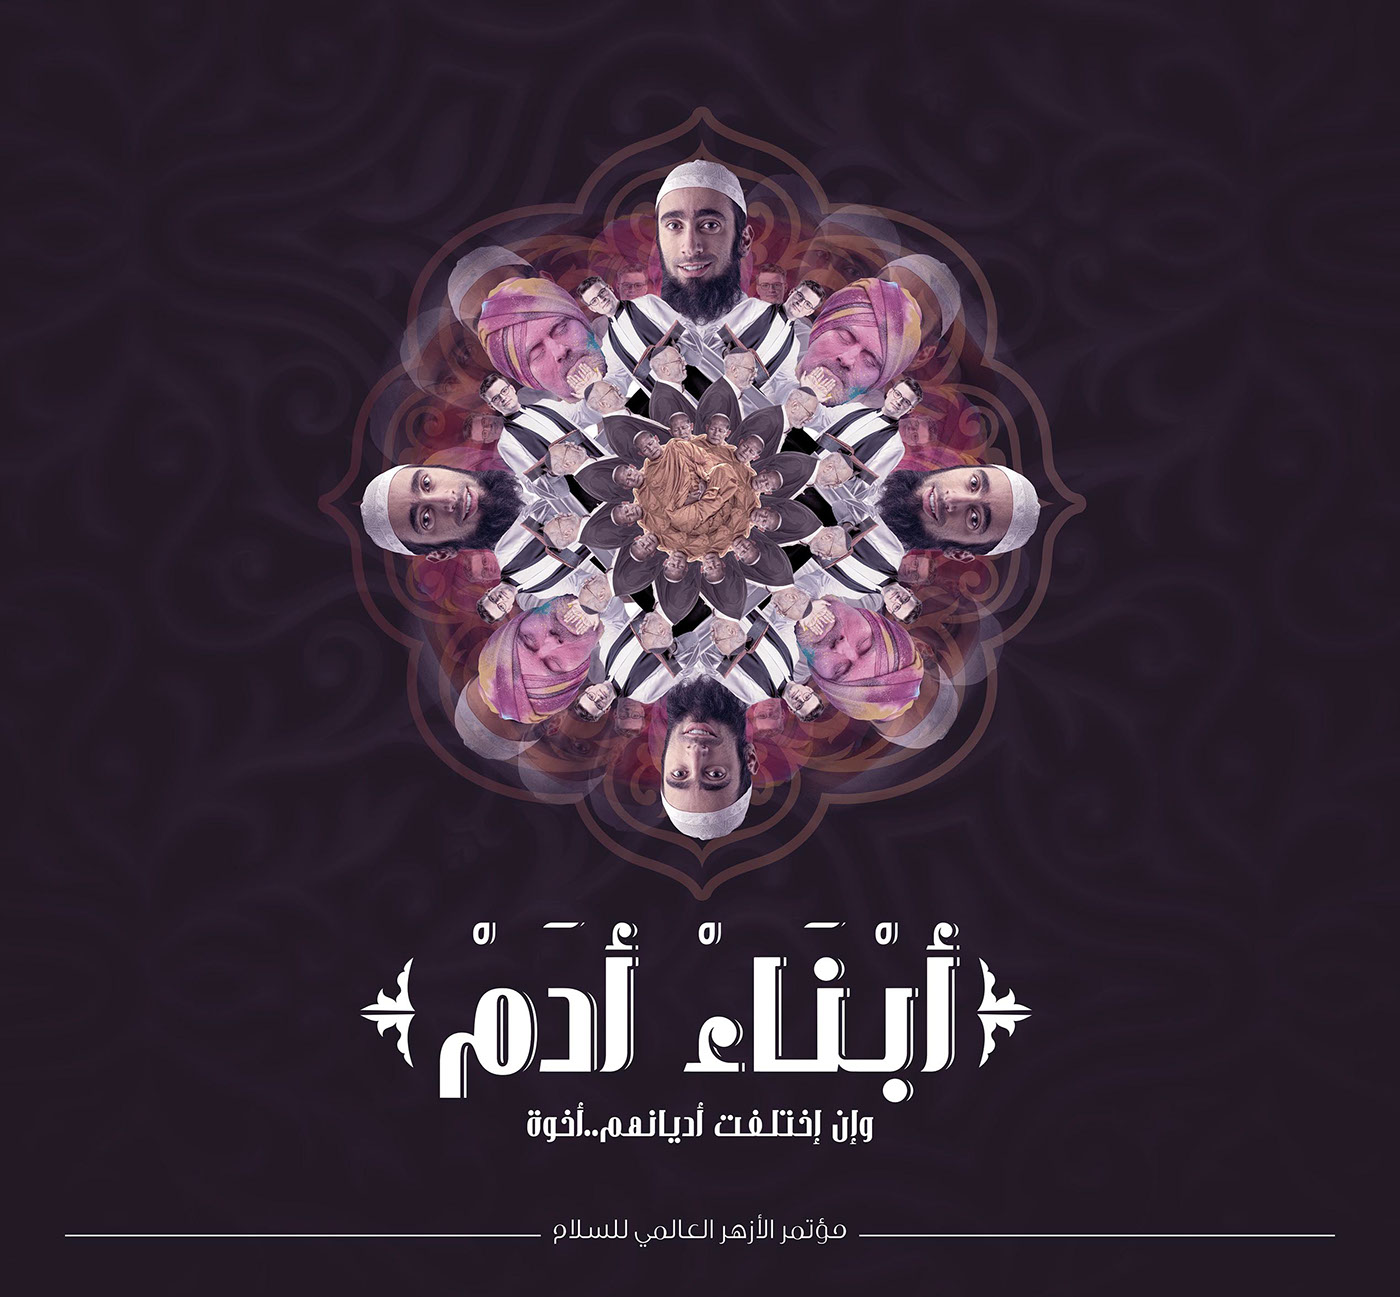 Adam Azhar islam egypt effect art compositing manipulation